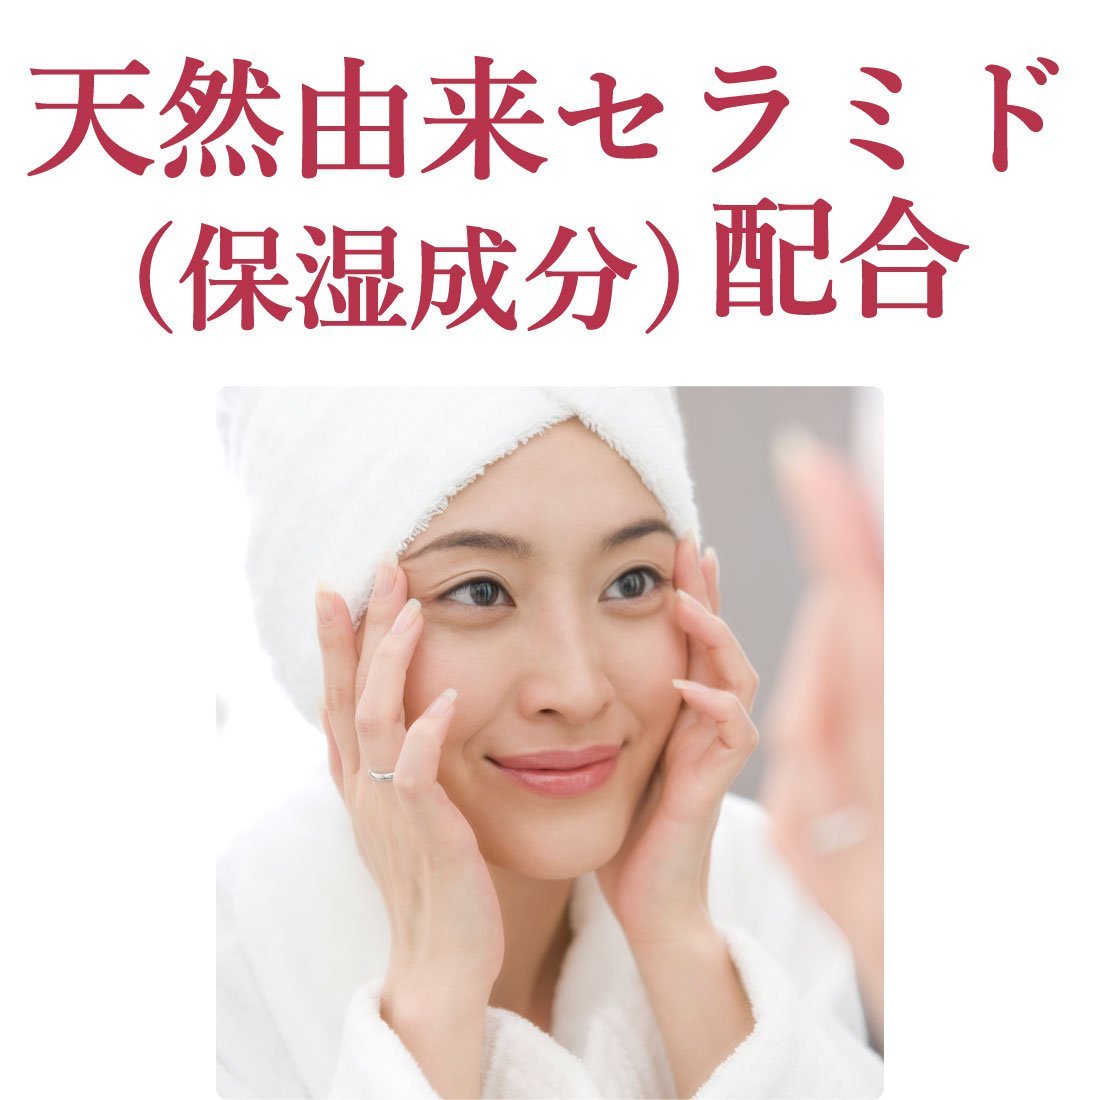 Gyunyu Non Additive Foaming Facial Cleanser - Cow Brand | Kiokii and...